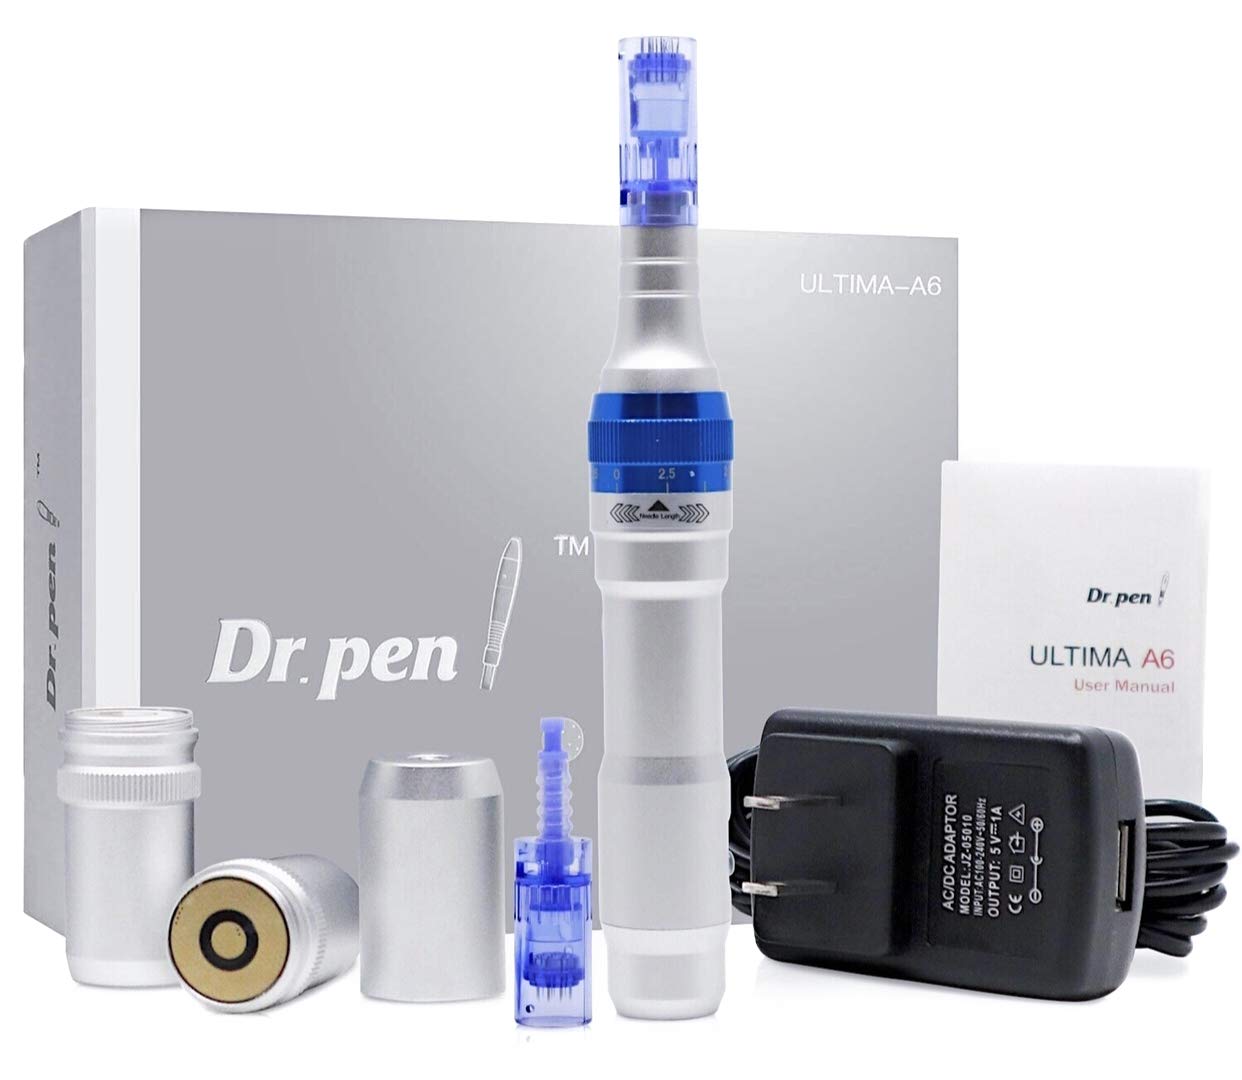 Dr. Pen Ultima A6 - Professional Derma Pen for Micro needling - Wireless Electric Skin Repair Tool Kit - Dr Pen in Pakistan